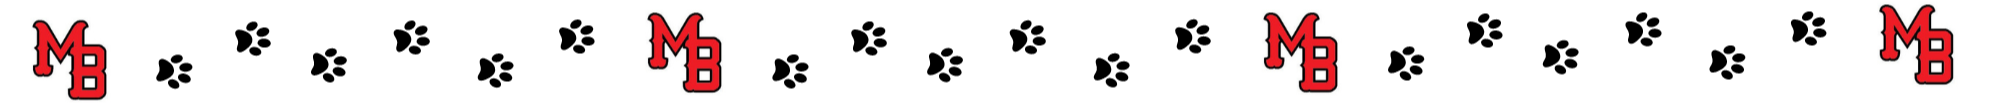 Mount Baker logo, dog paw prints